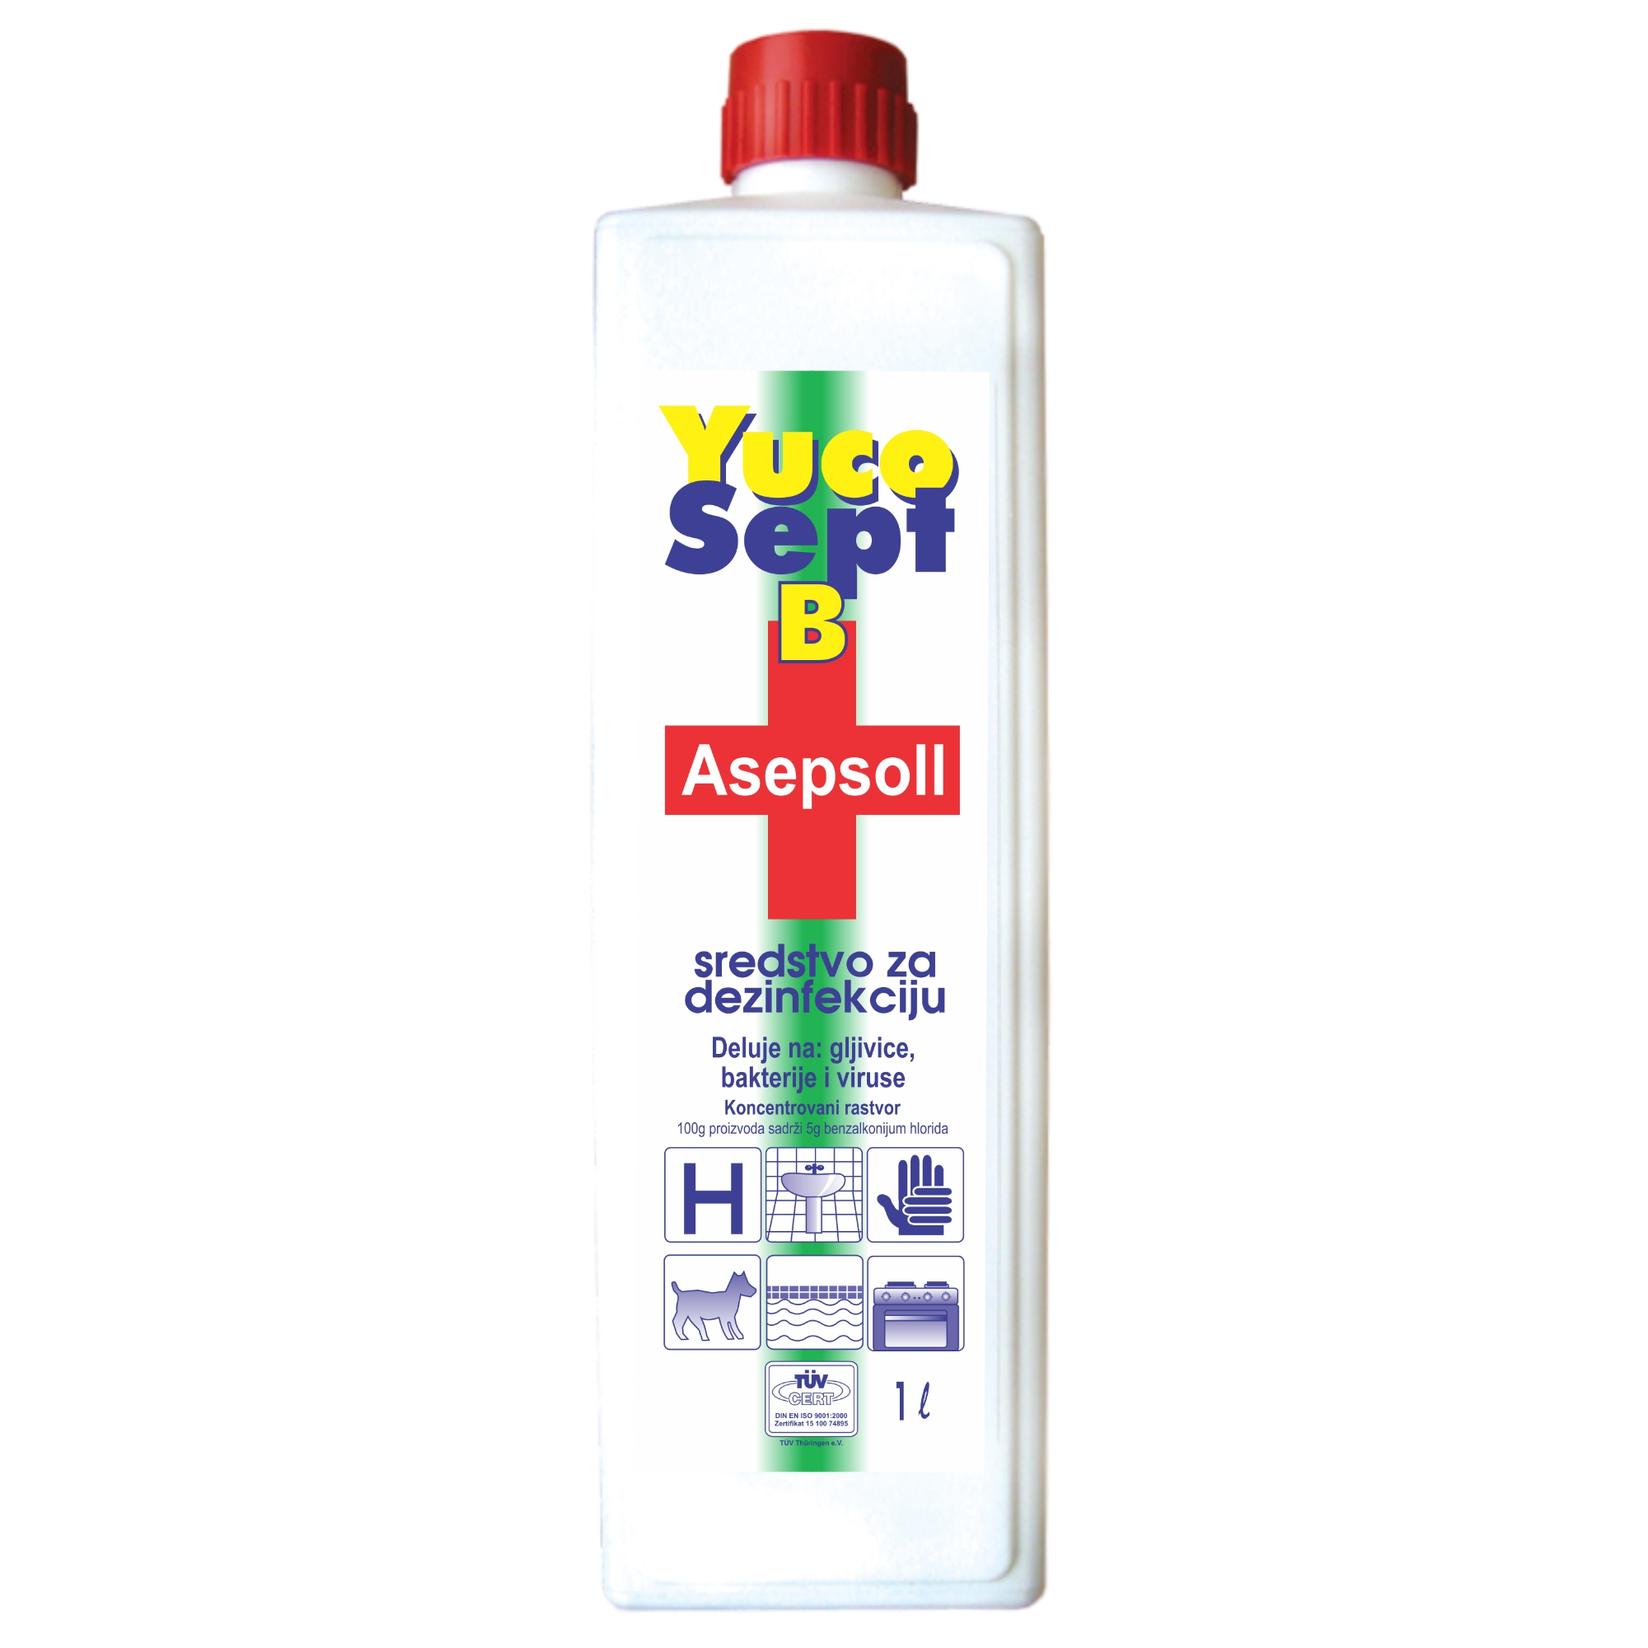 YUCOSEPT Koncentrovano tečno sredstvo za dezinfekciju Asepsoll 5.0% 1l